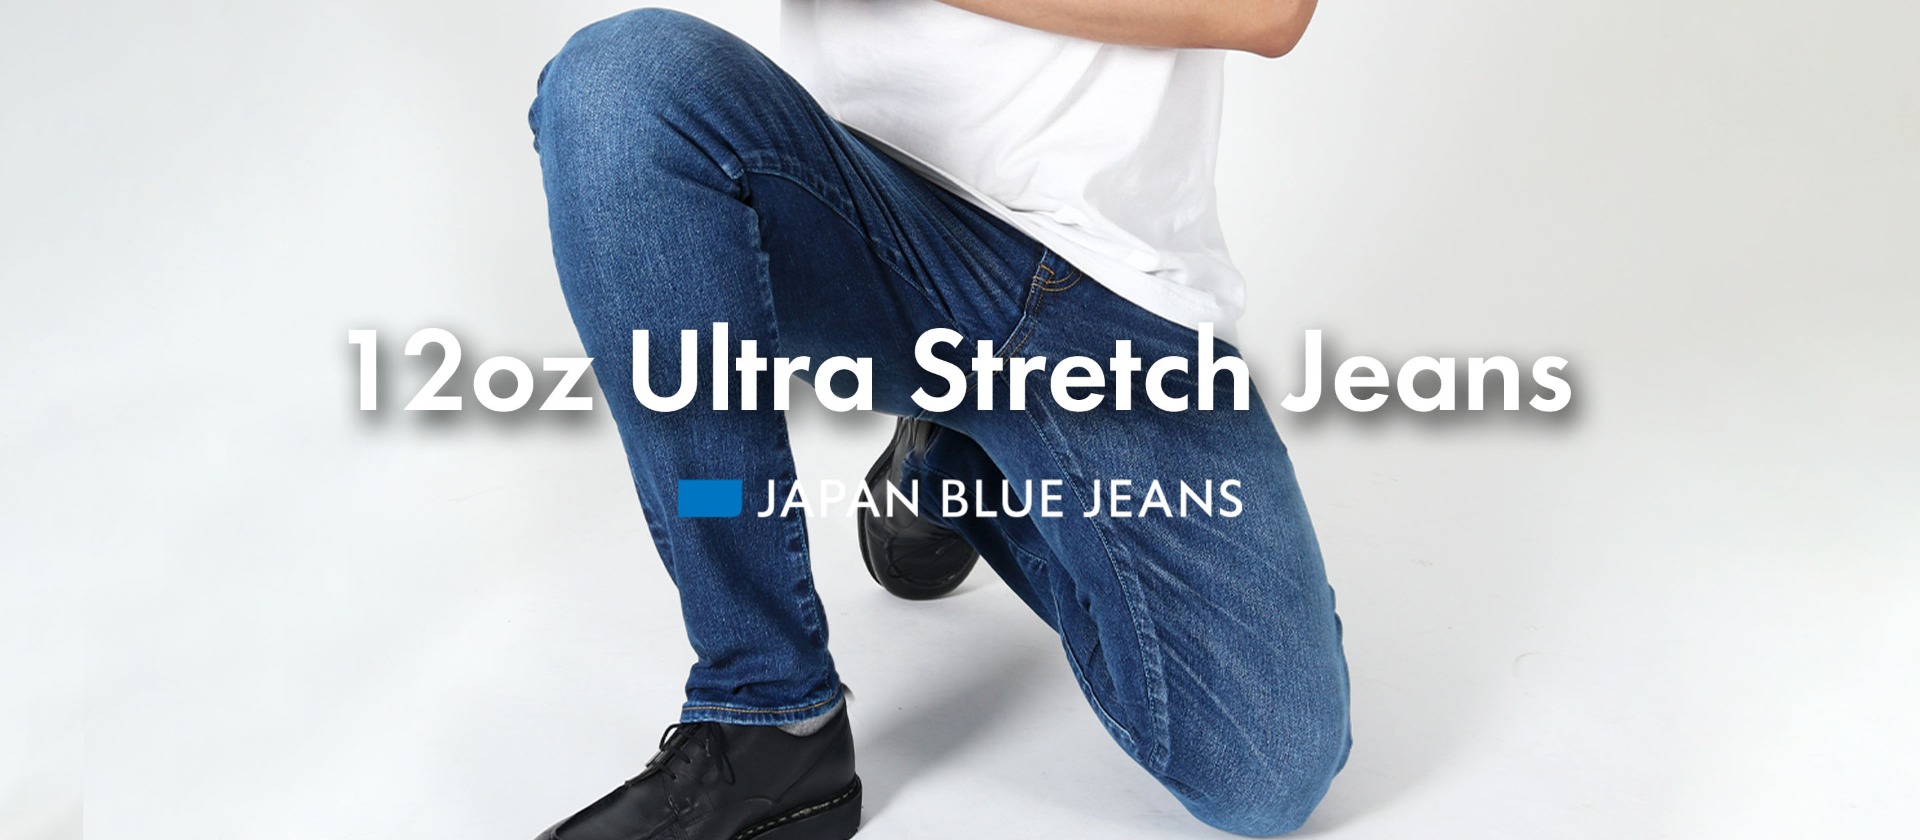 12oz Ultra Stretch Jeans